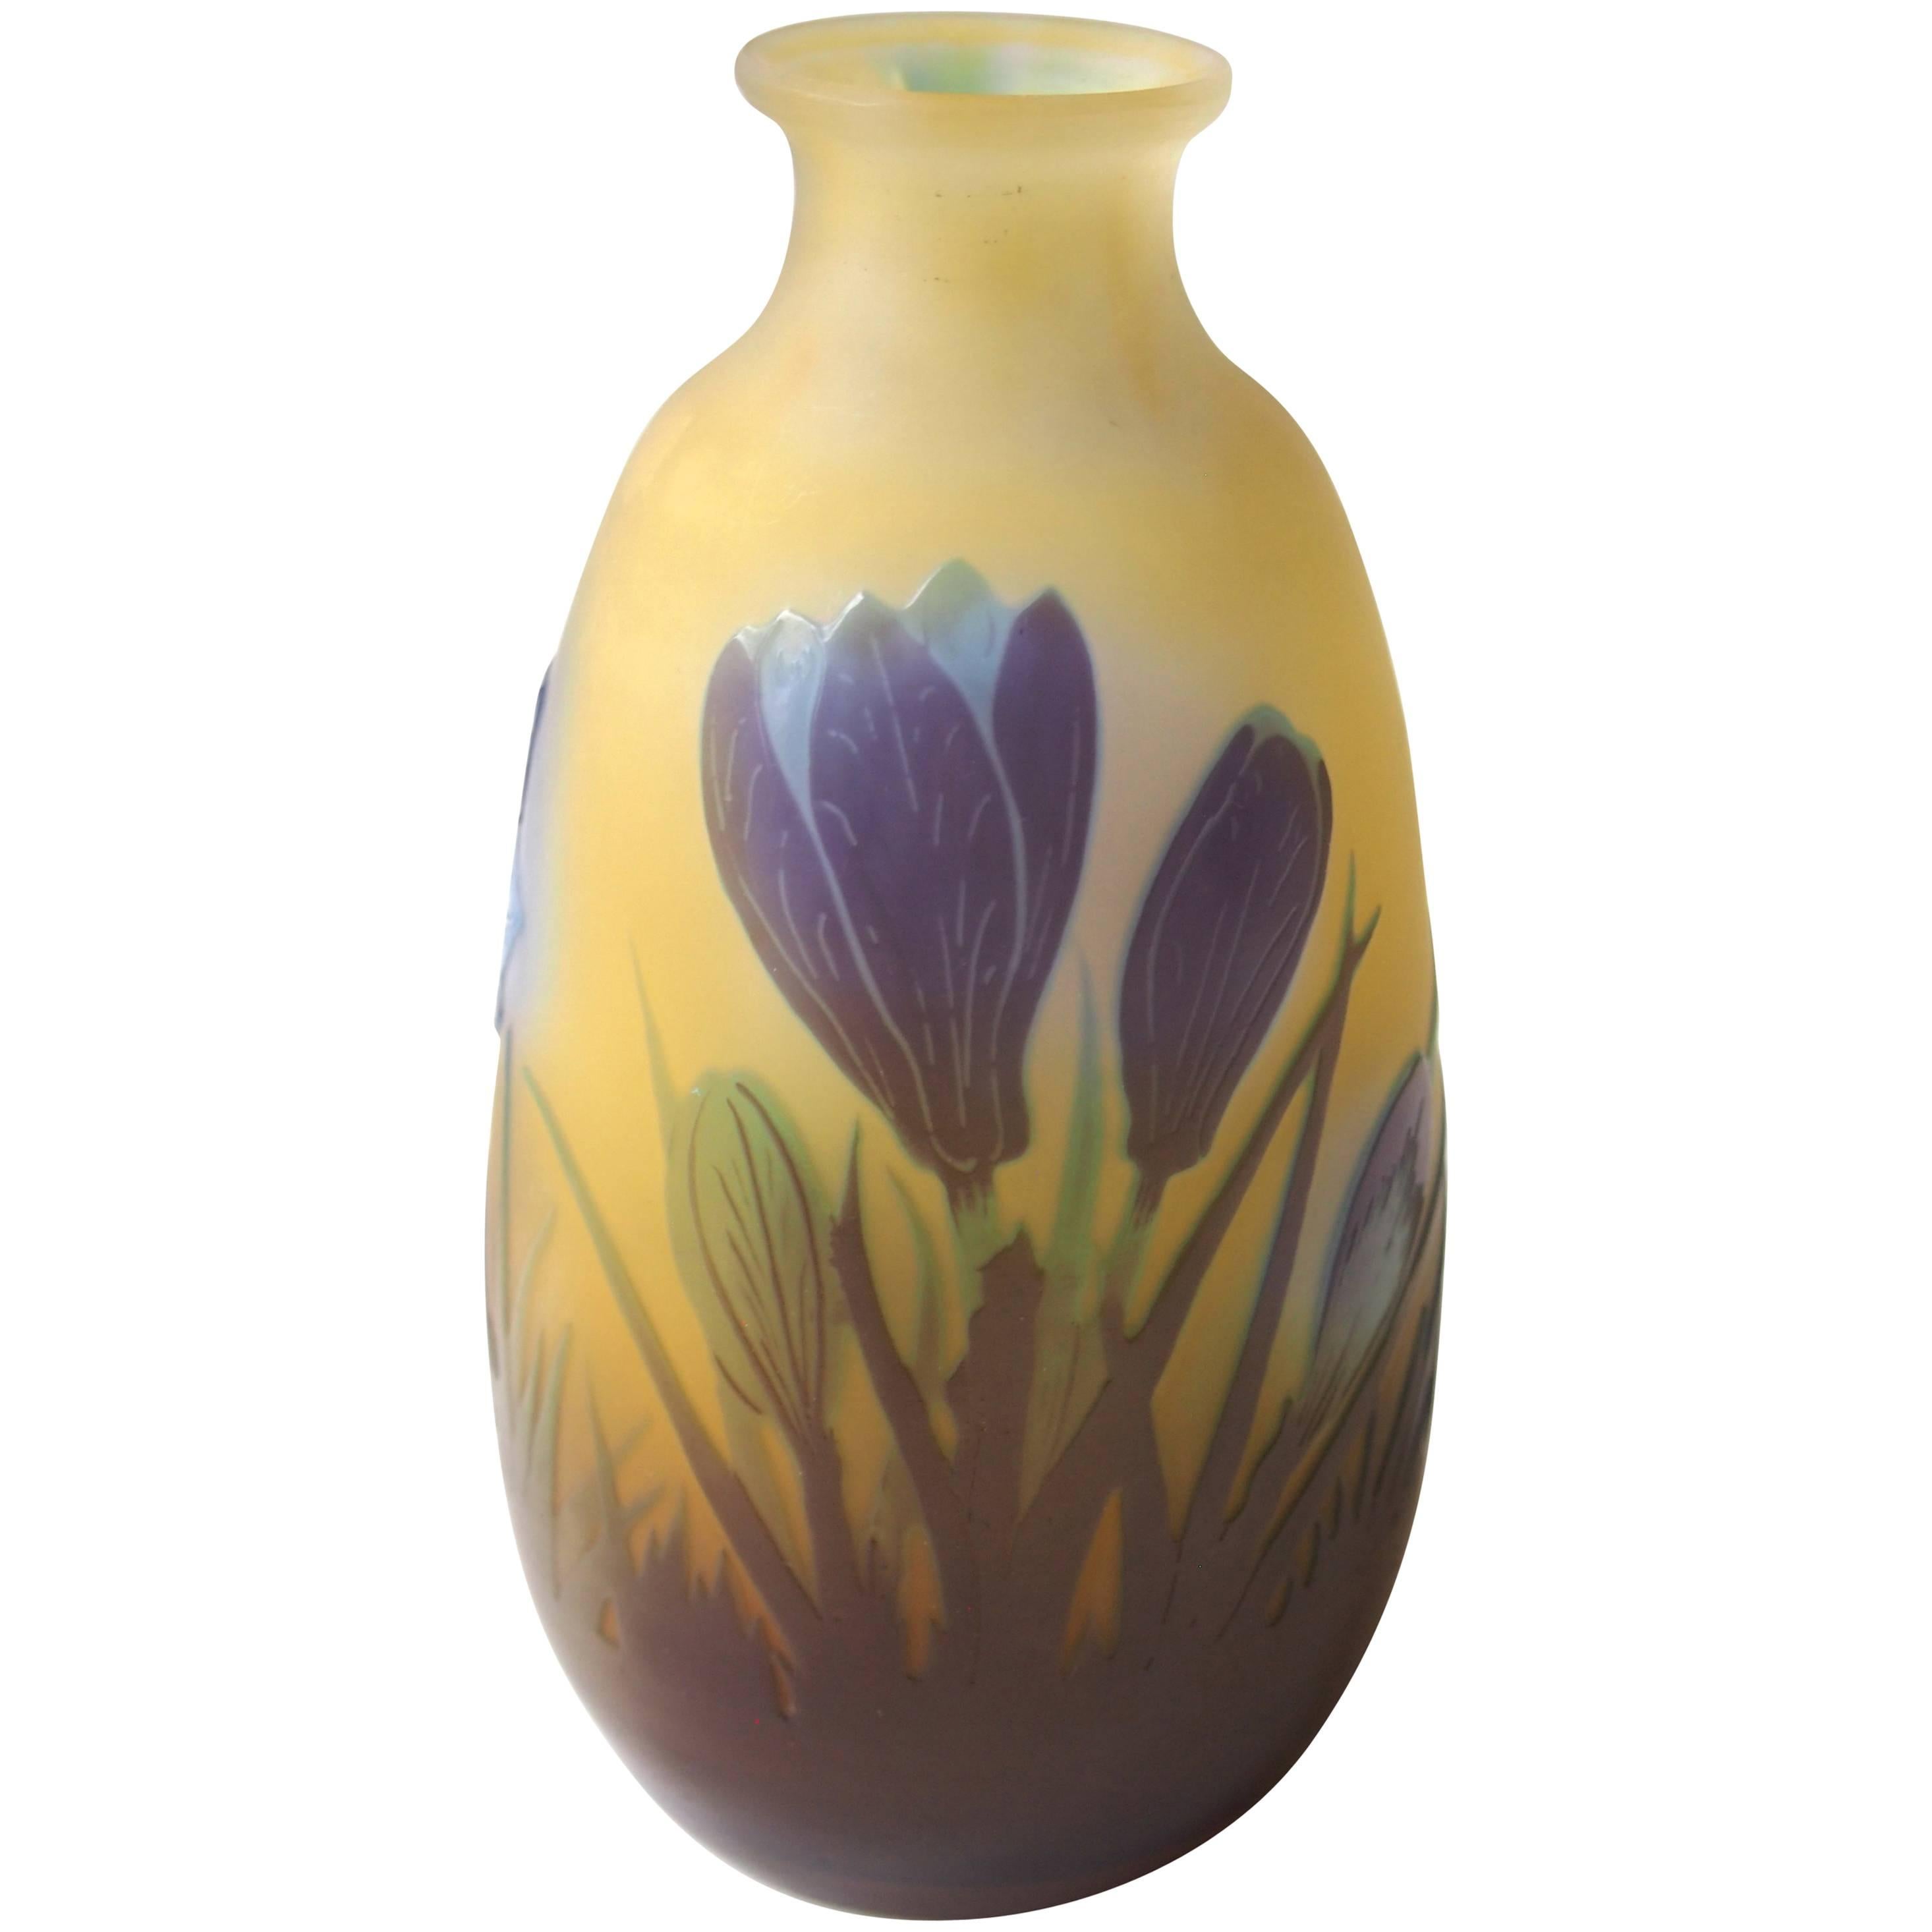 French Emile Galle Art Nouveau Cameo Glass Crocus Vase 1900 For Sale